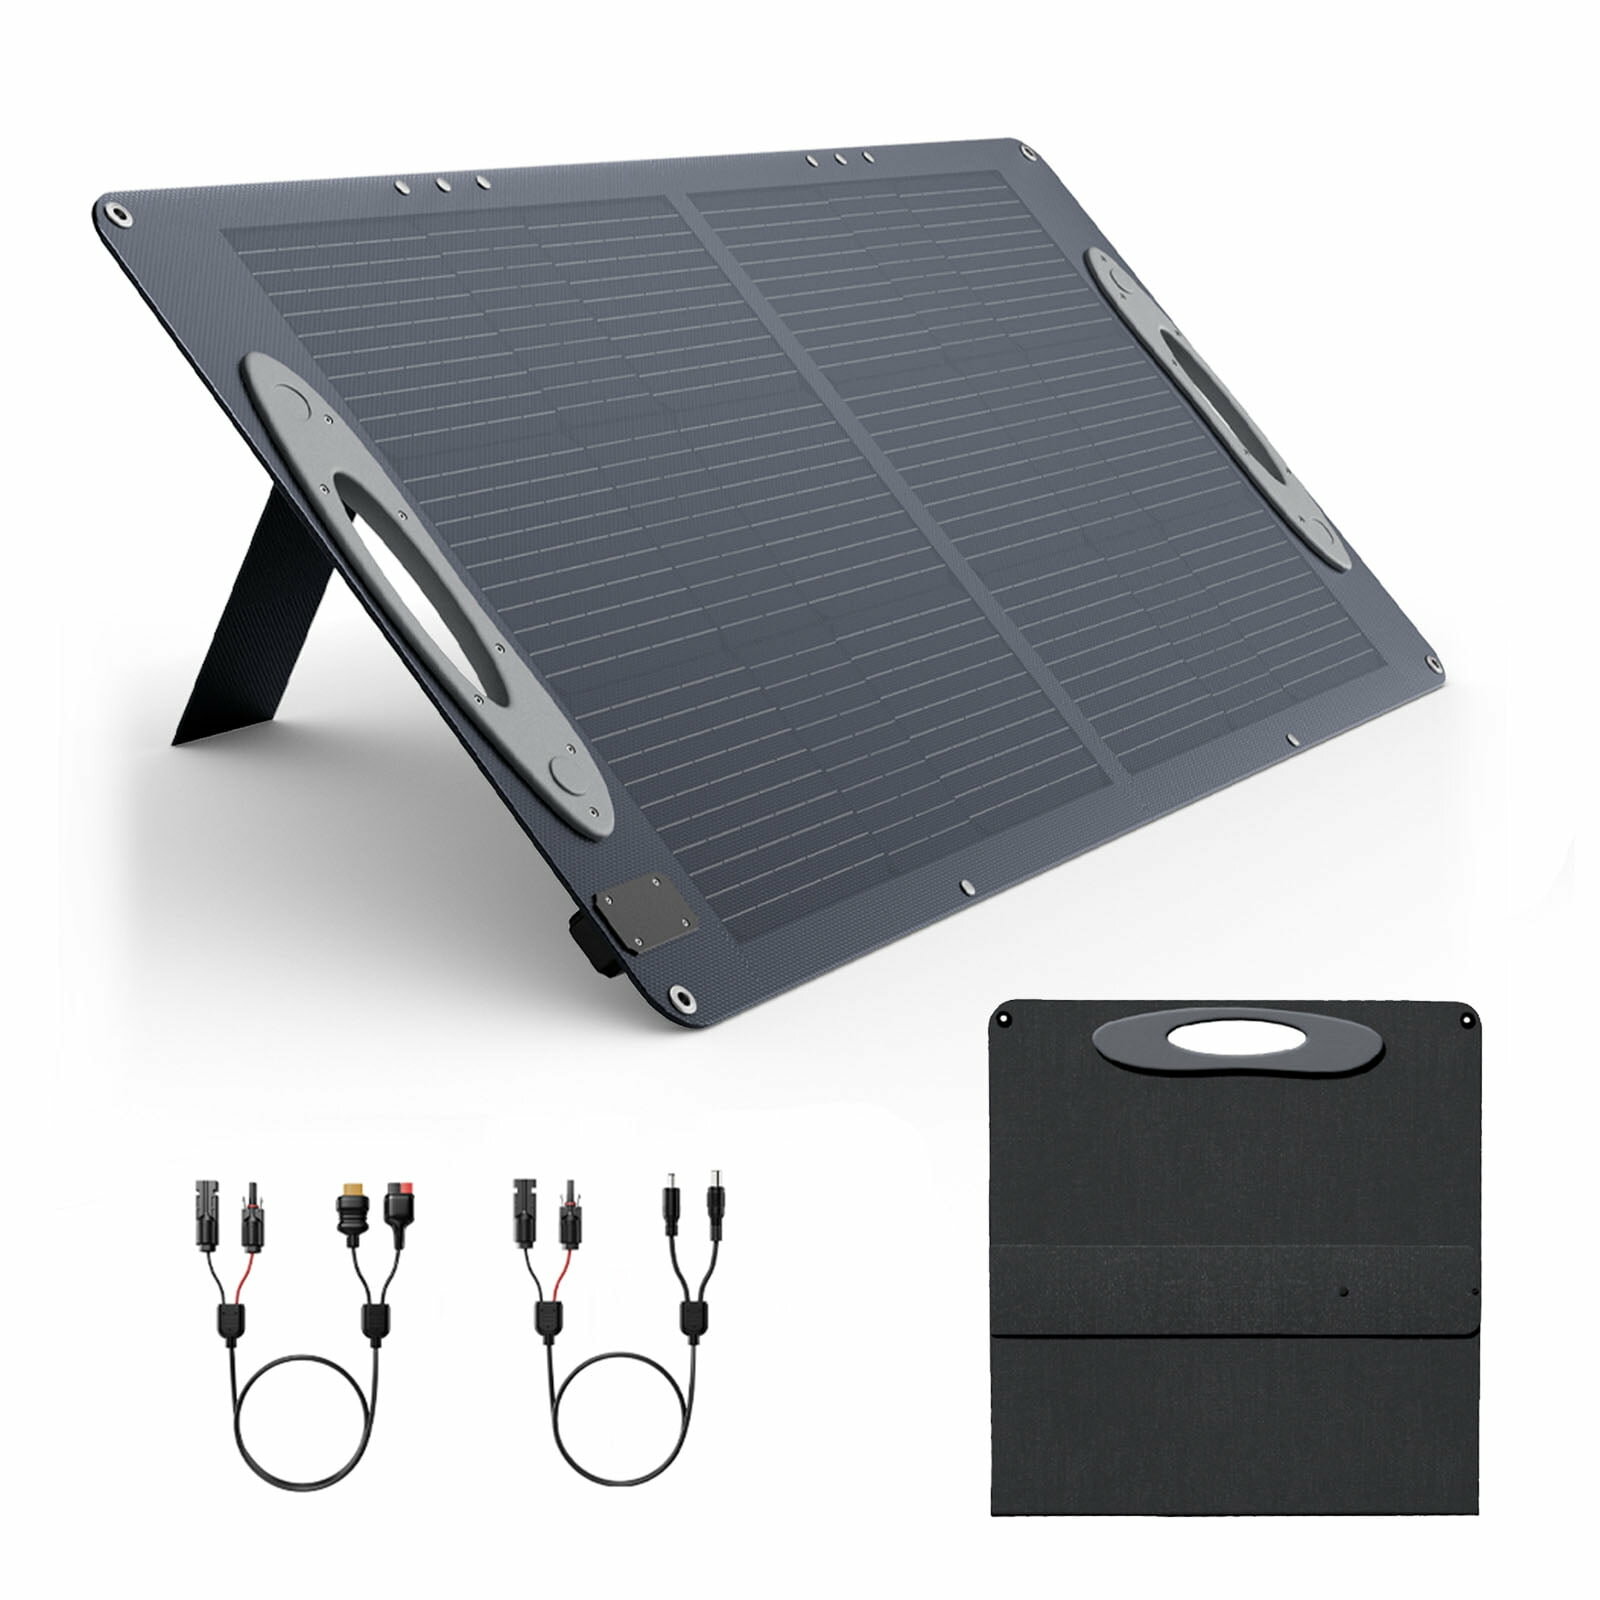 [EU Direct] VDL SC0101 100W ETFE Solarpanel 5V USB 20V DC Multi-Contact 4 Multi-Output Solar Panels 23,5% Effizienz Tragbares Faltbares Solarpanel für Terrasse, Wohnmobil, Outdoor Camping Stromausfall Notfall